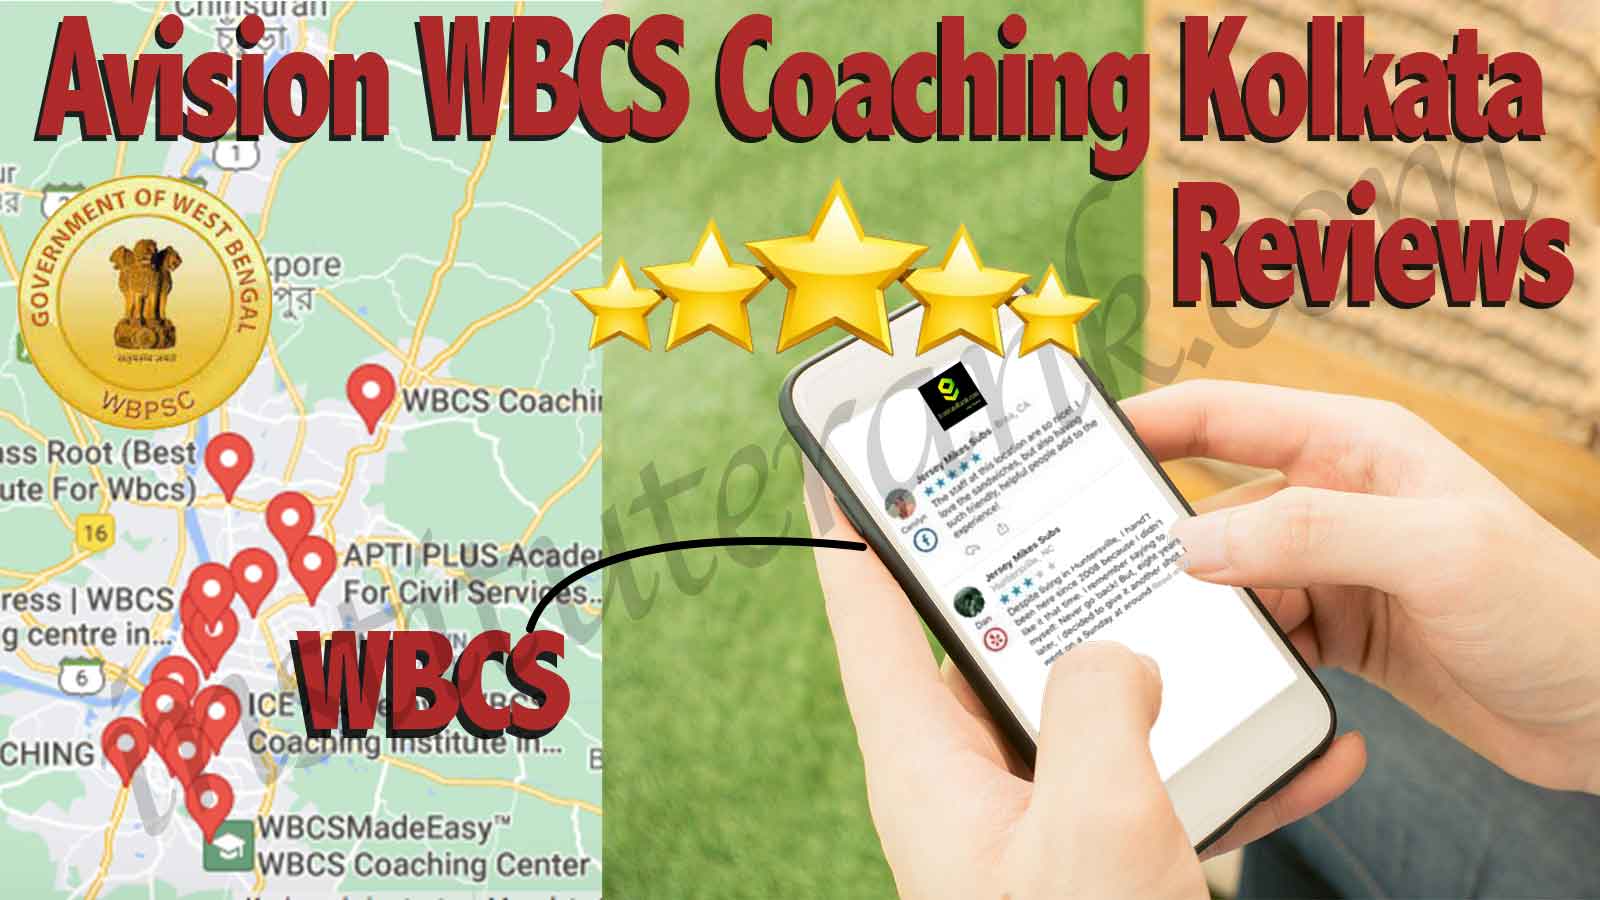 Avision WBCS Coaching in Kolkata Reviews